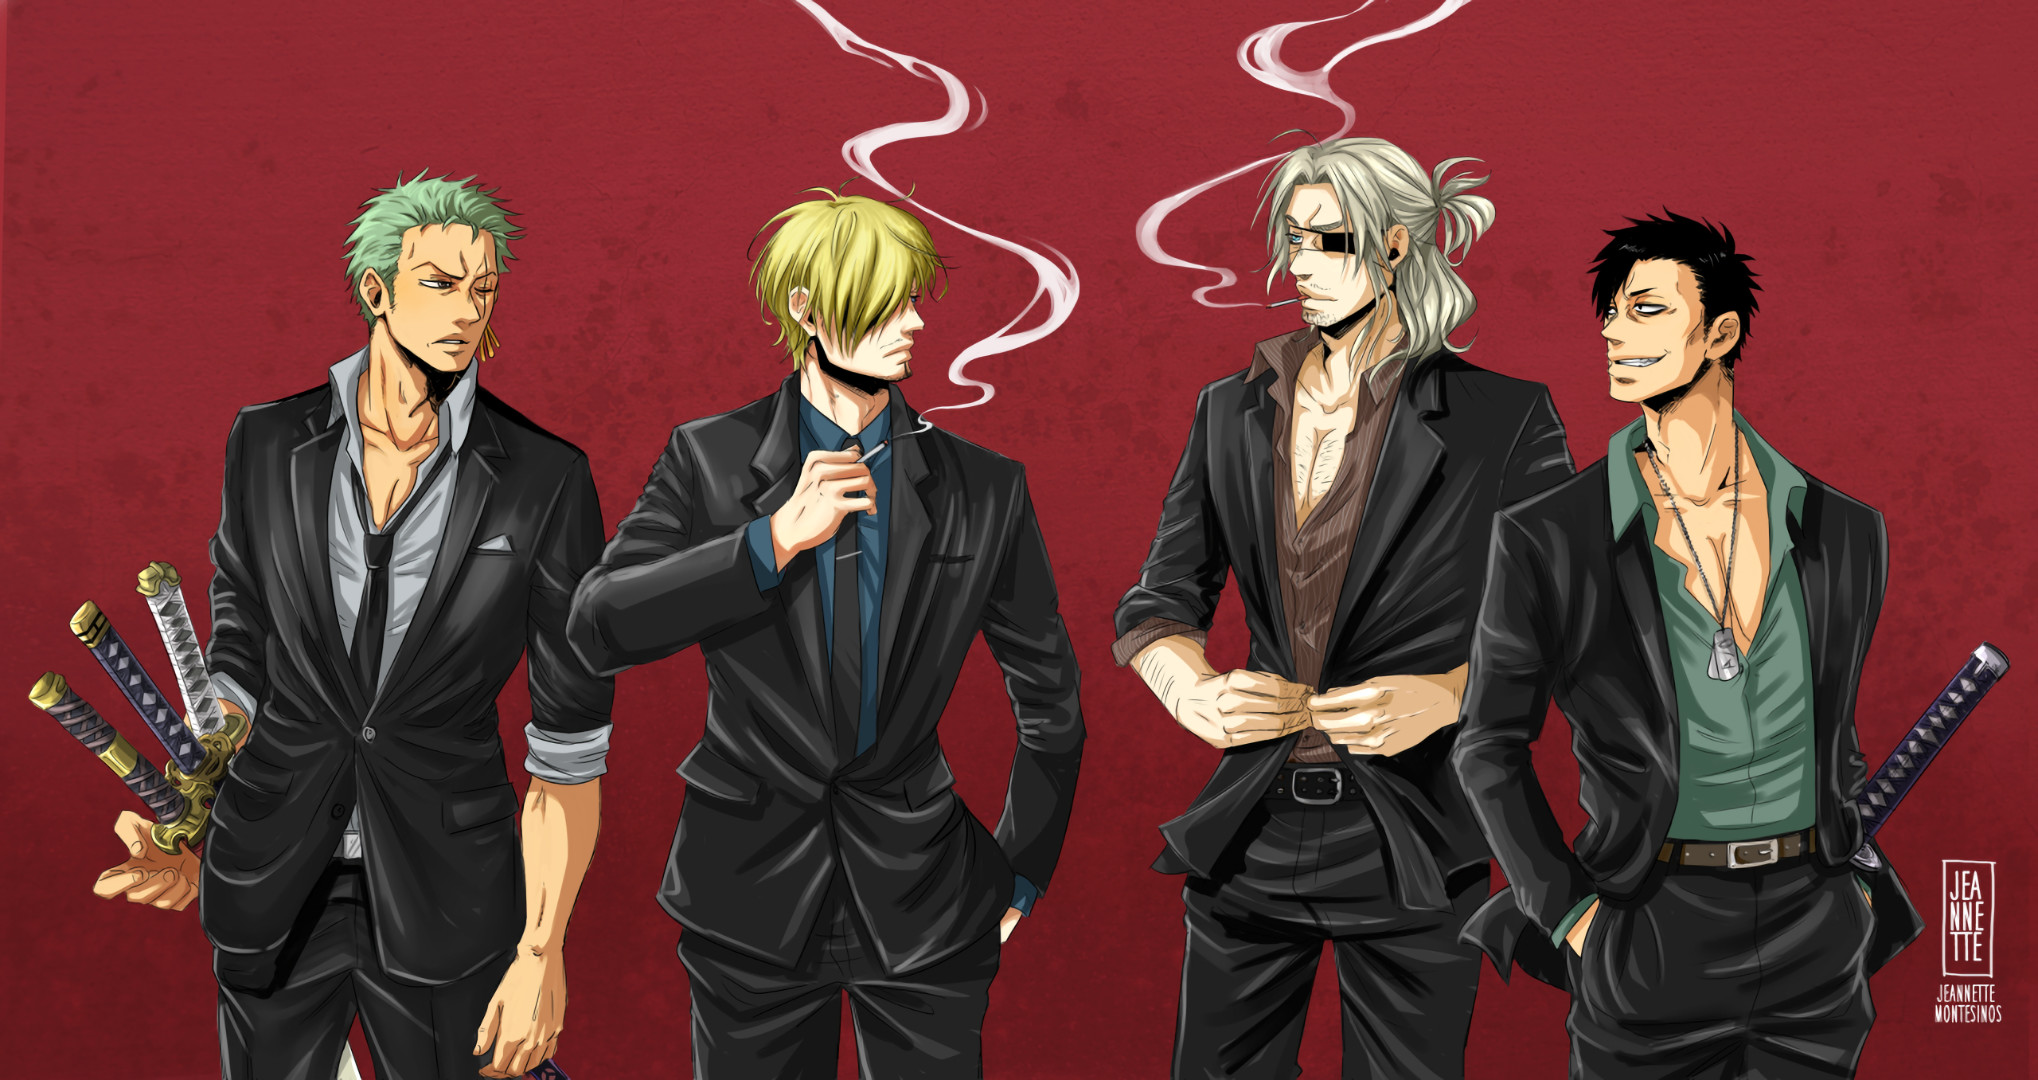 Mafia Cartoon Wallpaper : [42+] Gangsta Anime Wallpapers For Desktop On ...